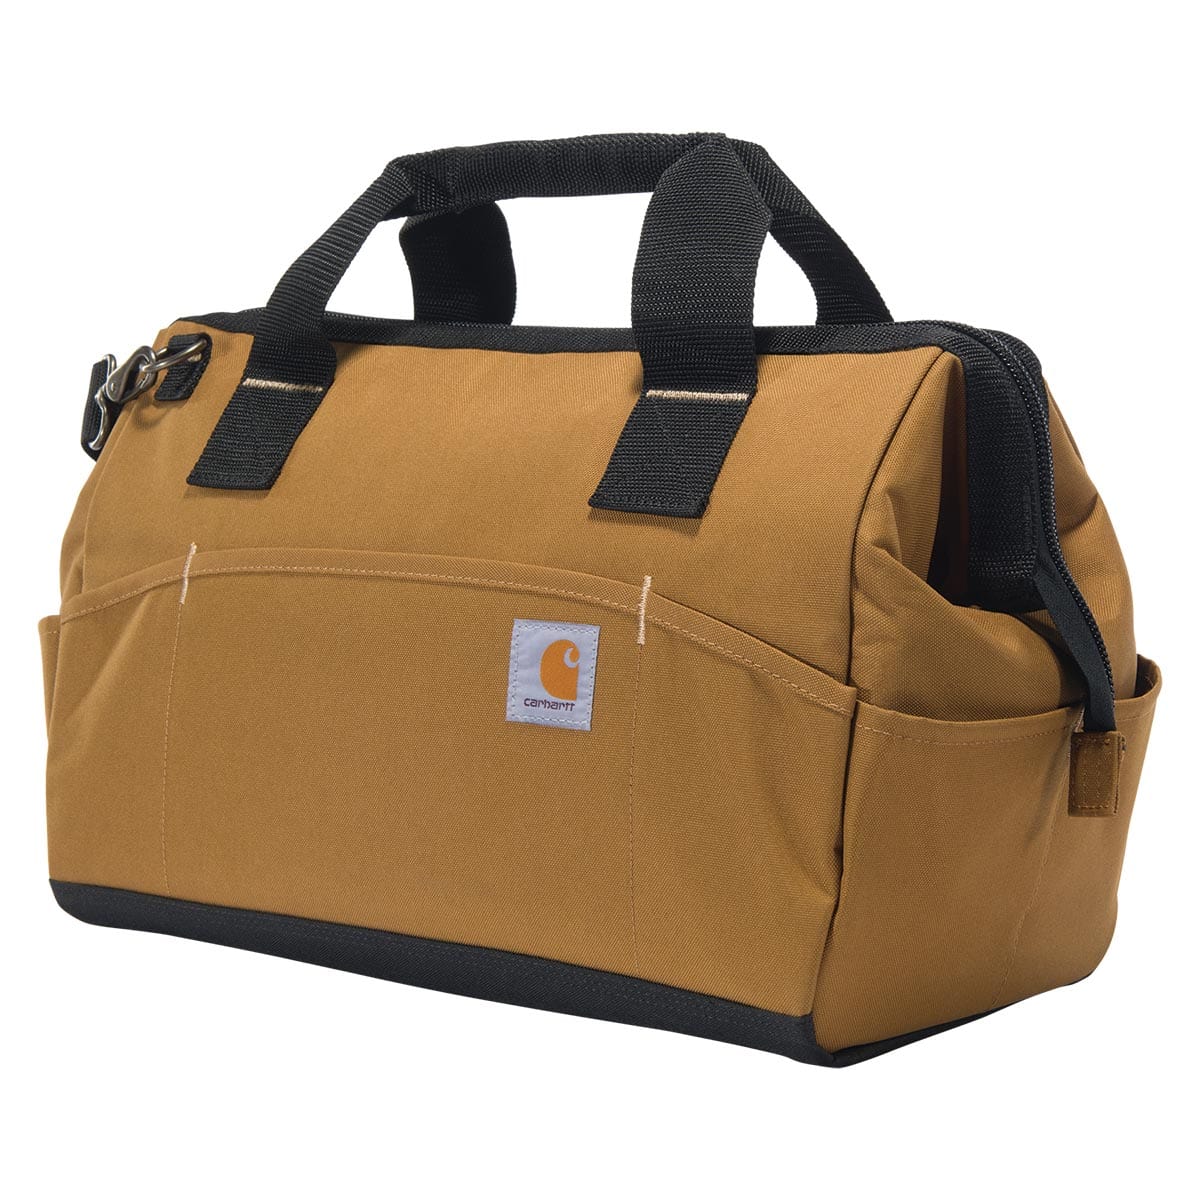 Carhartt 16-inch 17 Pocket Midweight Tool Bag